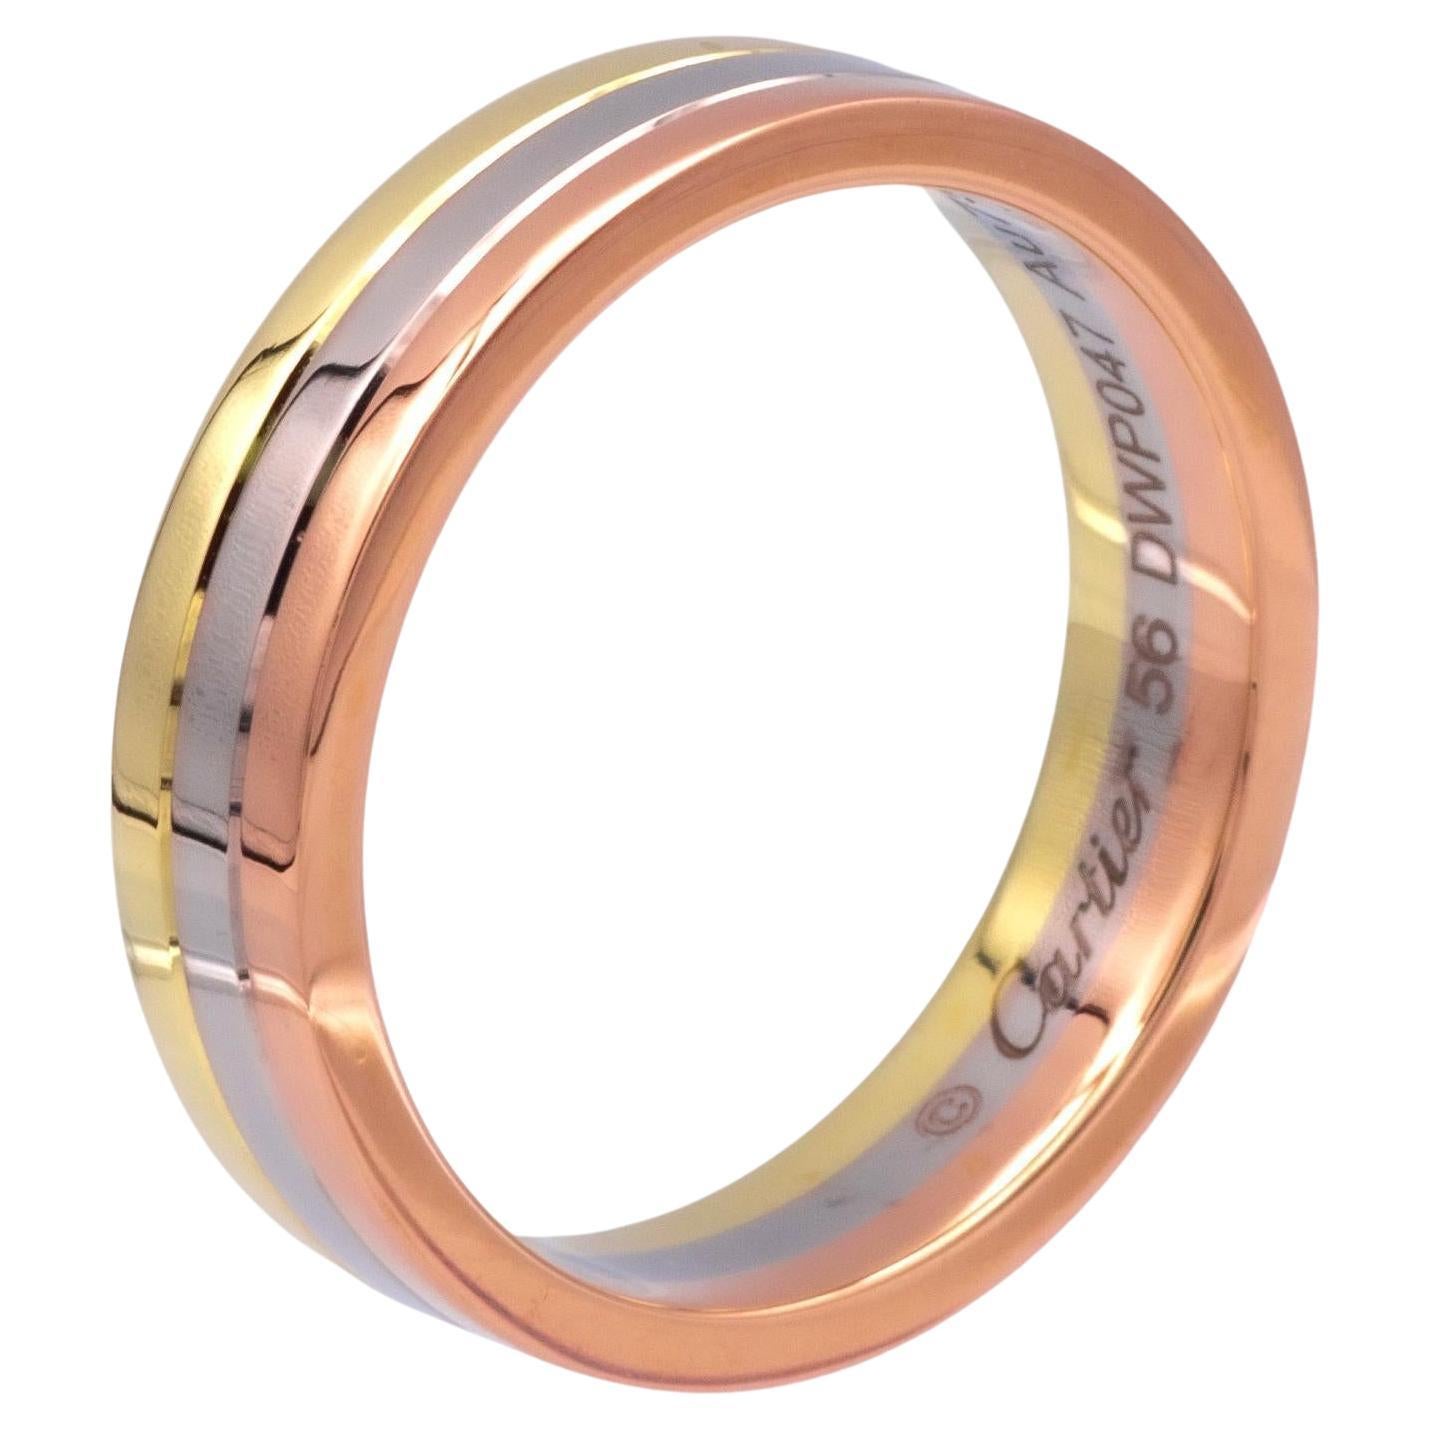 Vendome Louis Cartier 18K 3 Tone Gold Men's Wedding Band Ring Size 56/7.5 4.8mm